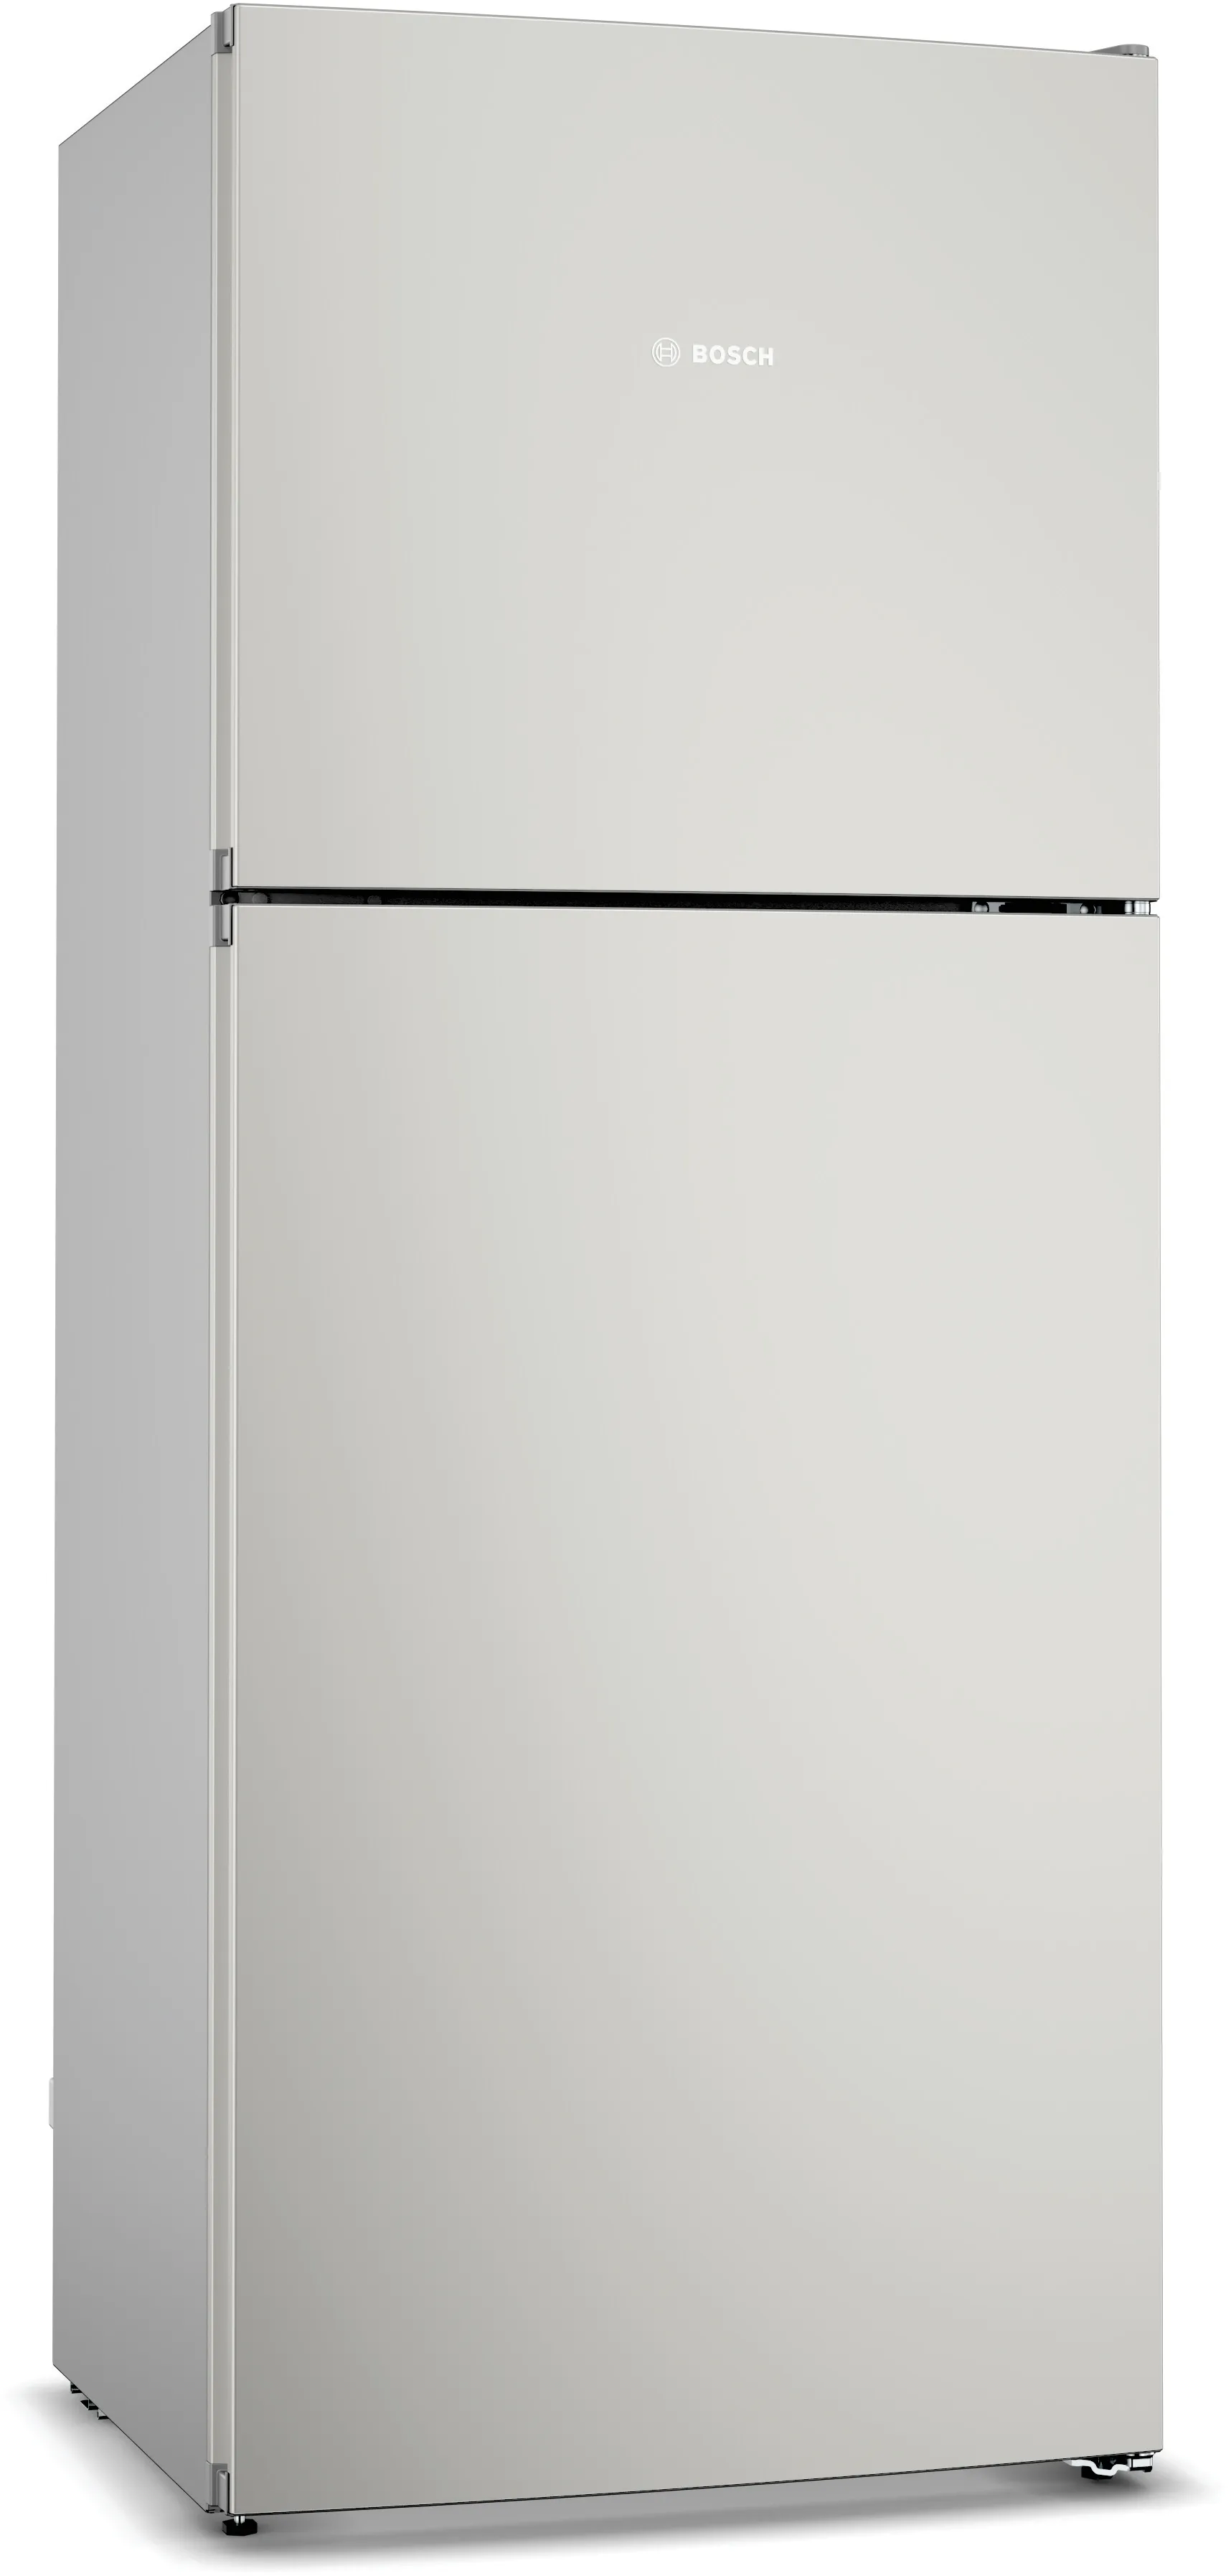 Series 2 free-standing fridge-freezer with freezer at top 178 x 70 cm Inox-look-metallic 